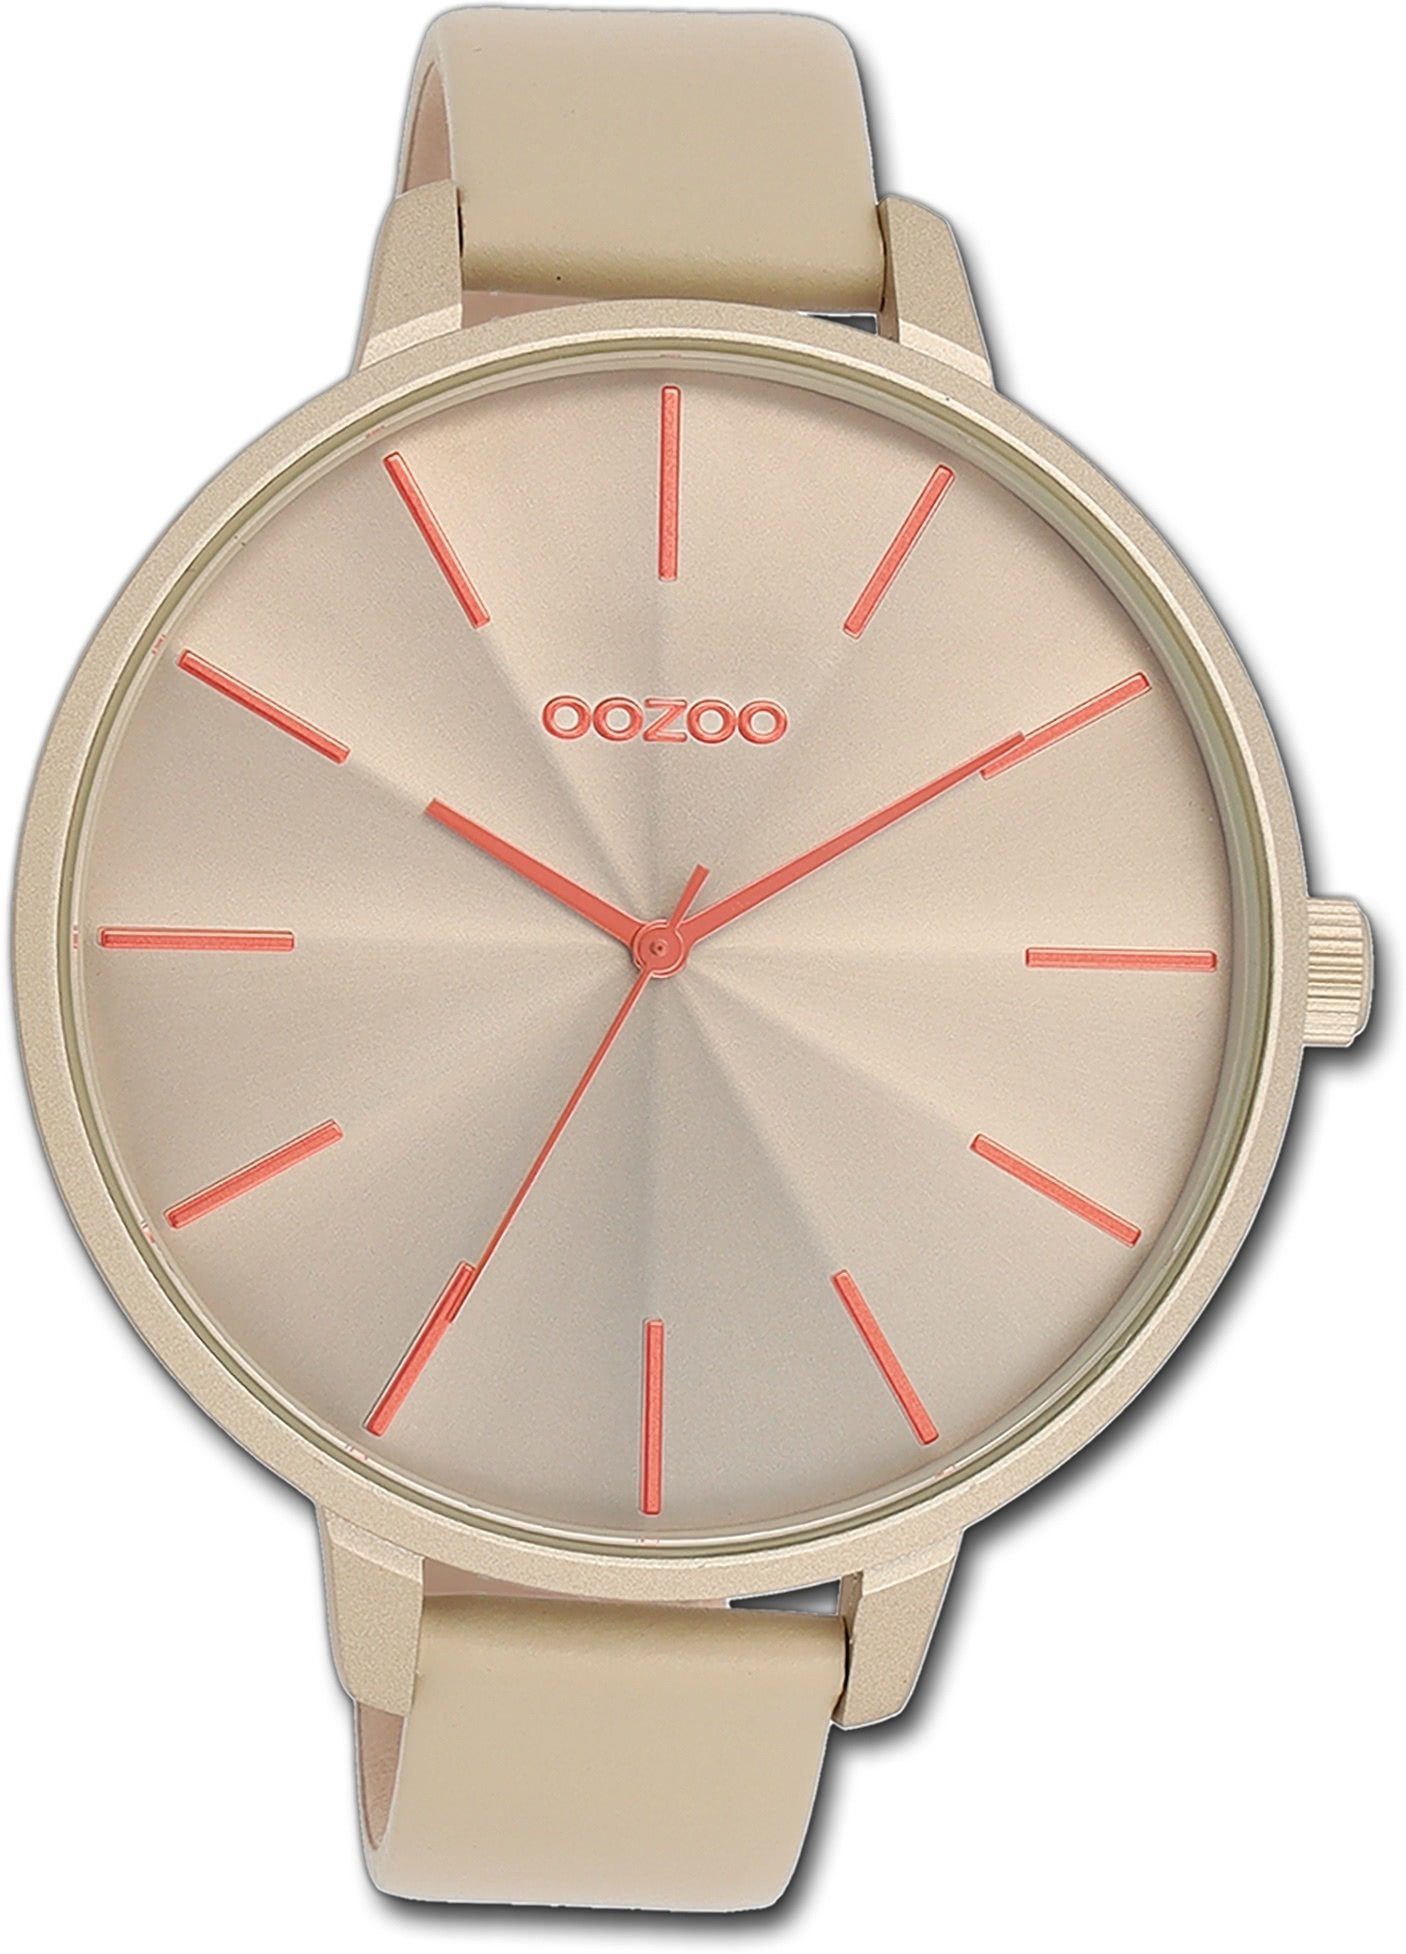 OOZOO Quarzuhr Oozoo Damen Armbanduhr Timepieces, (Analoguhr), Damenuhr Lederarmband khaki, rundes Gehäuse, extra groß (ca. 48mm)